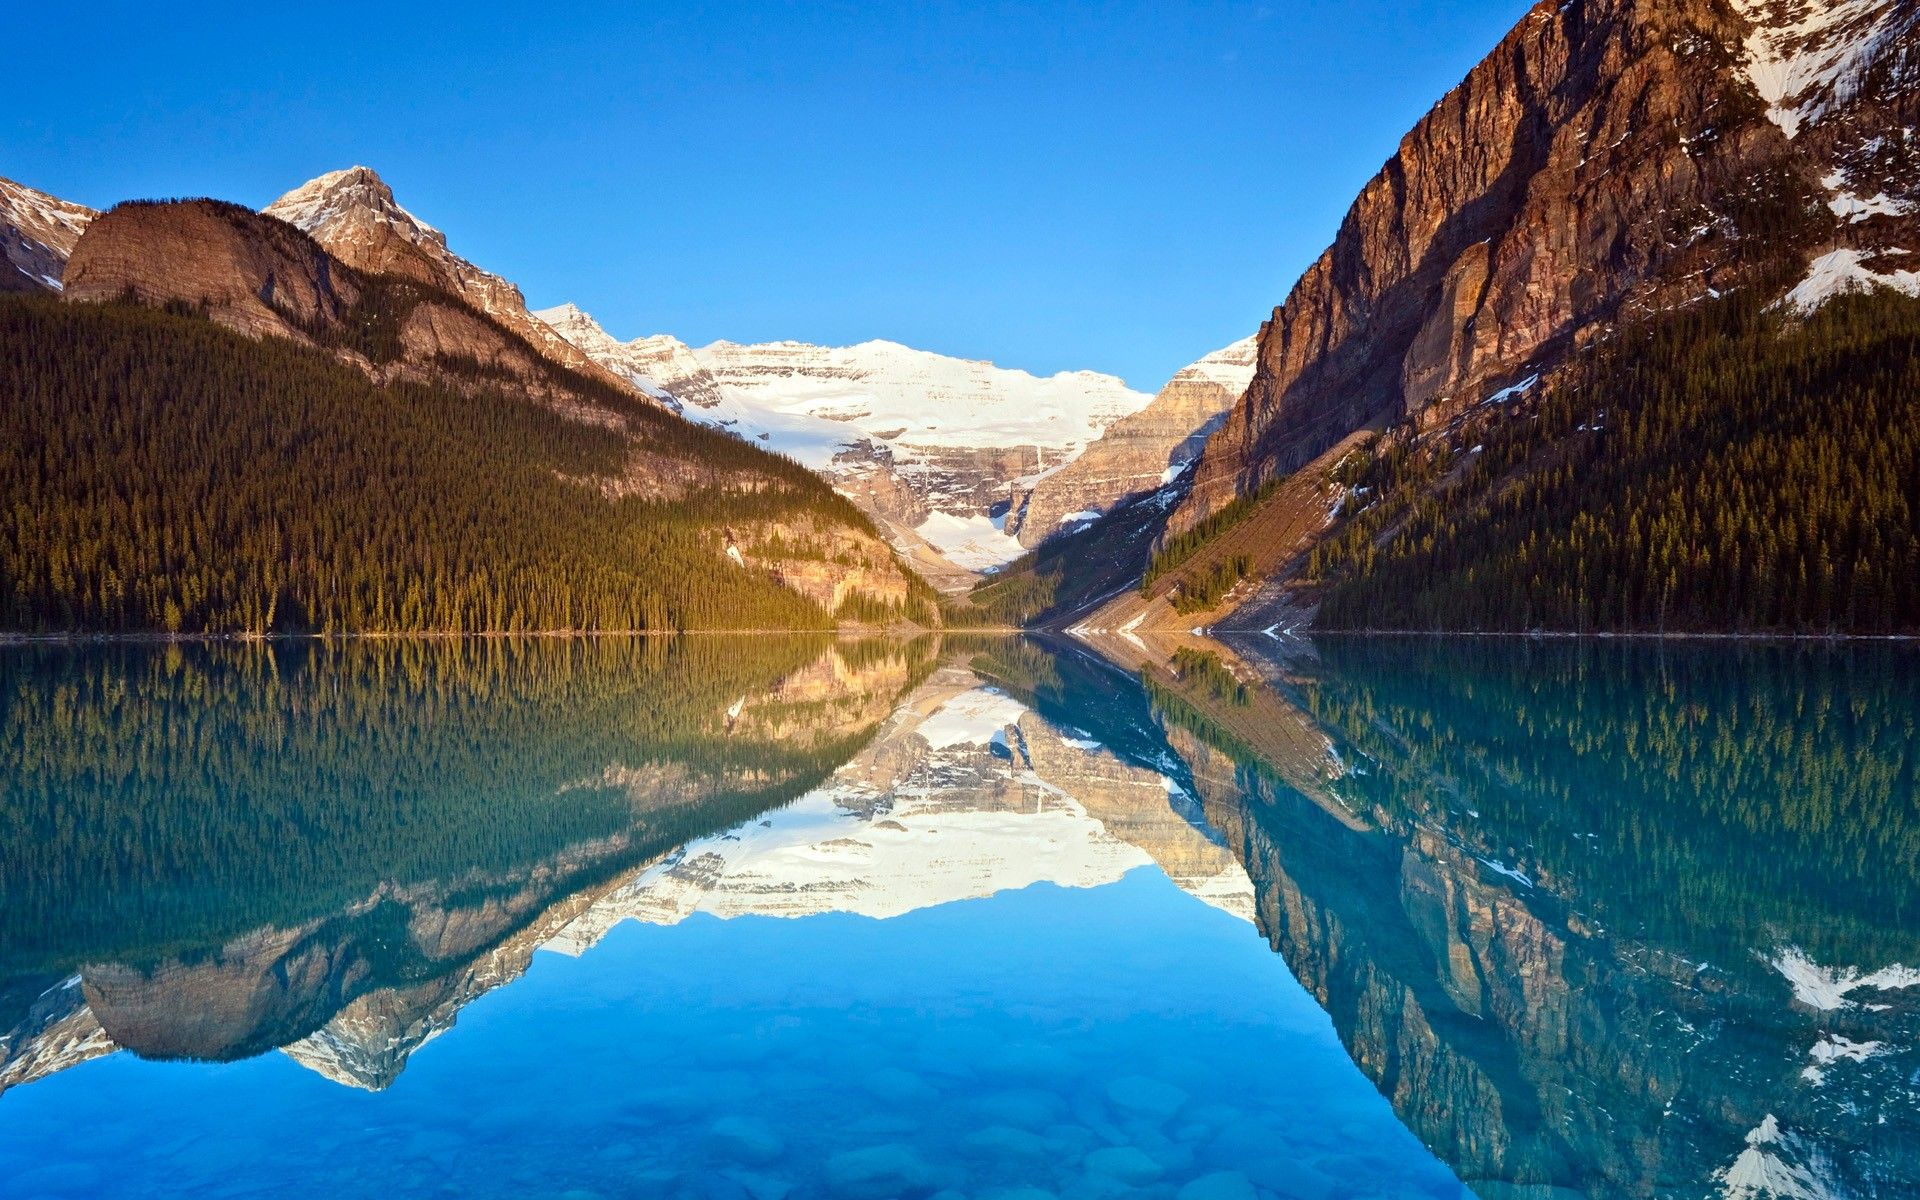 Lake Louise Reflections, HD Nature, 4k Wallpaper, Image